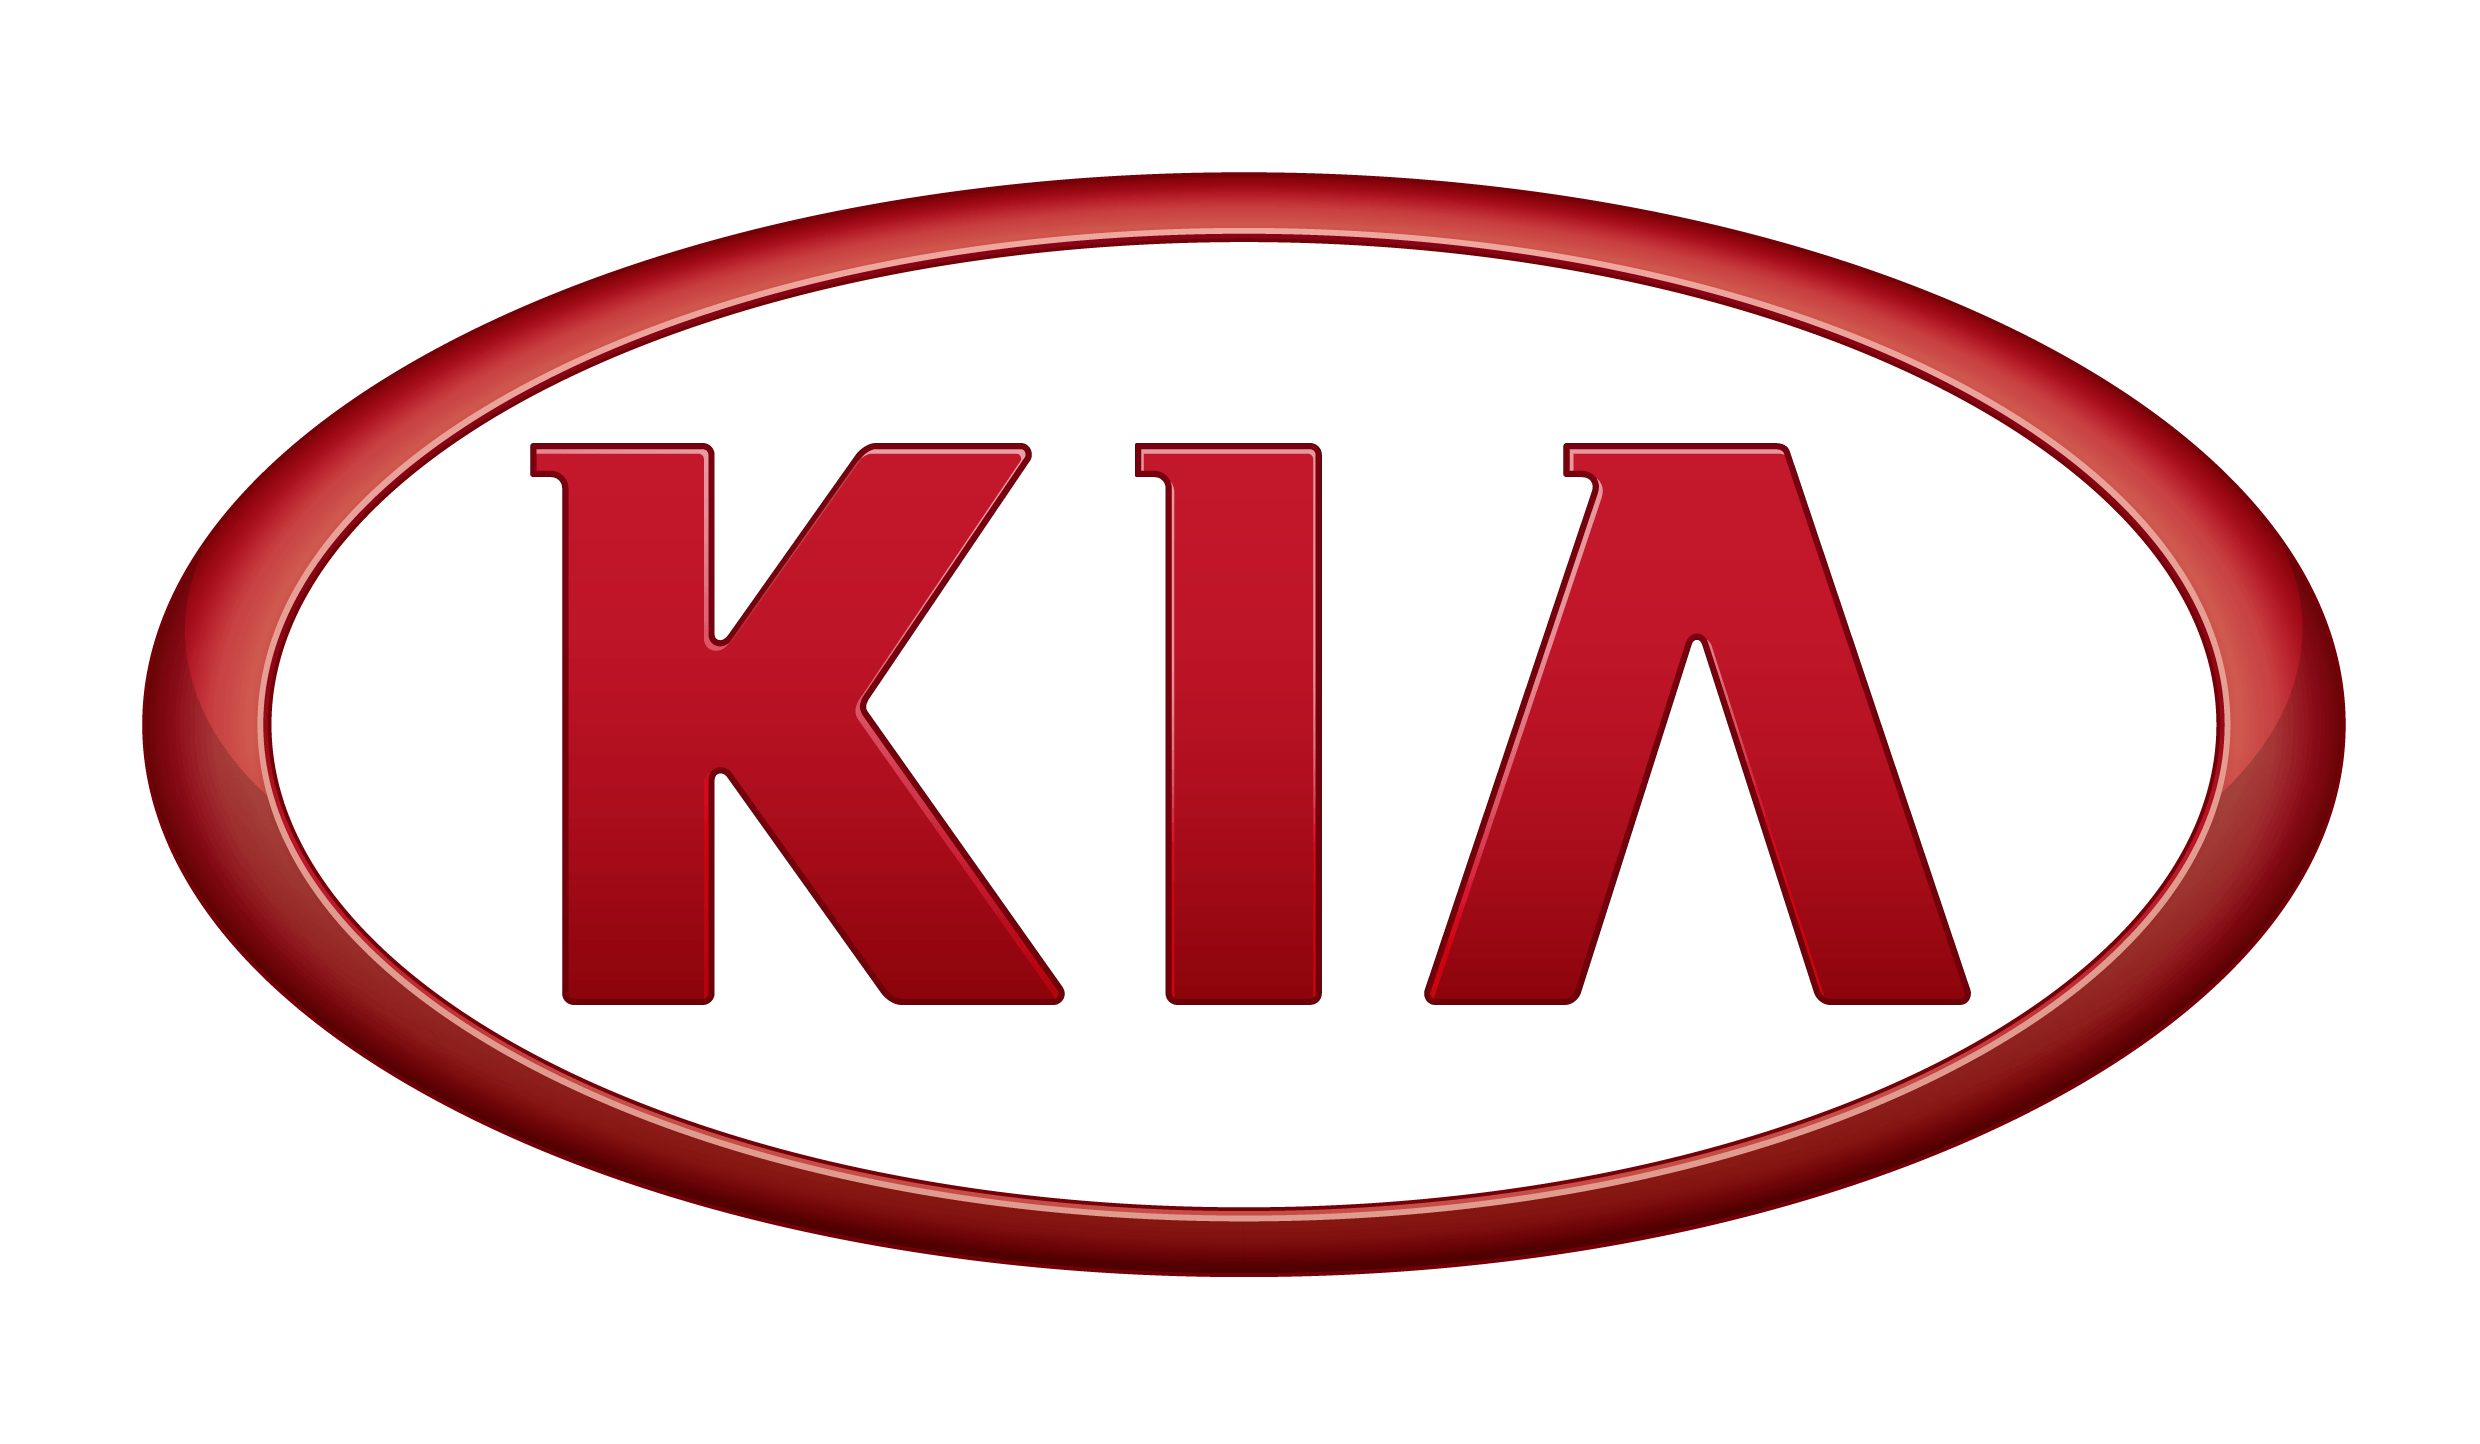 Red Korean Company Logo - Kia Logo, Kia Car Symbol Meaning and History | Car Brand Names.com